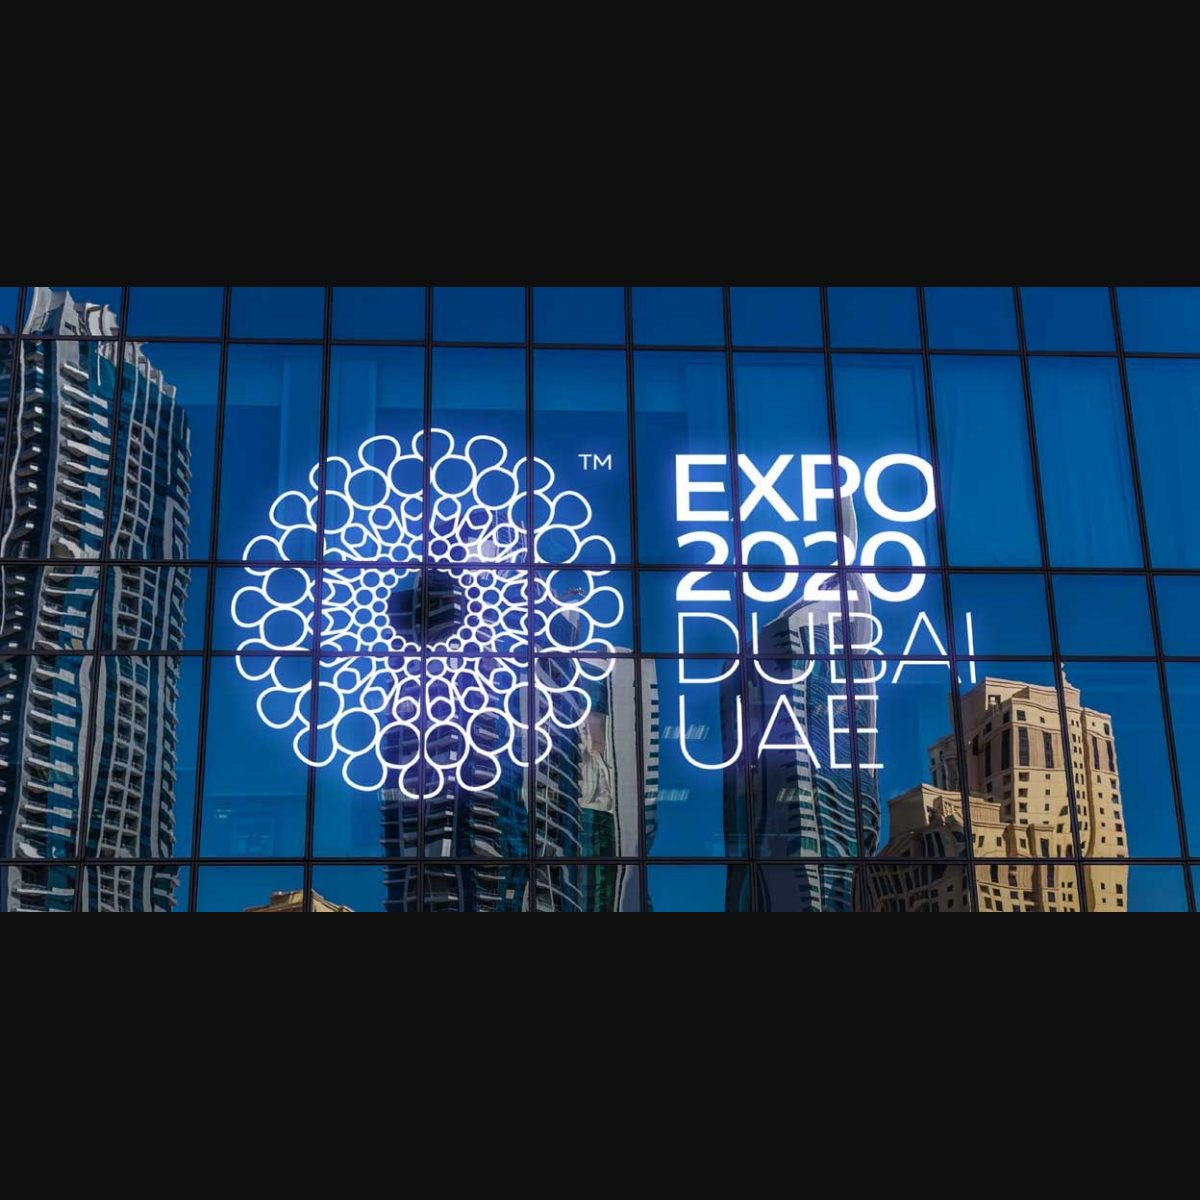 Expo 2020 Dubai says some venues may close temporarily as virus